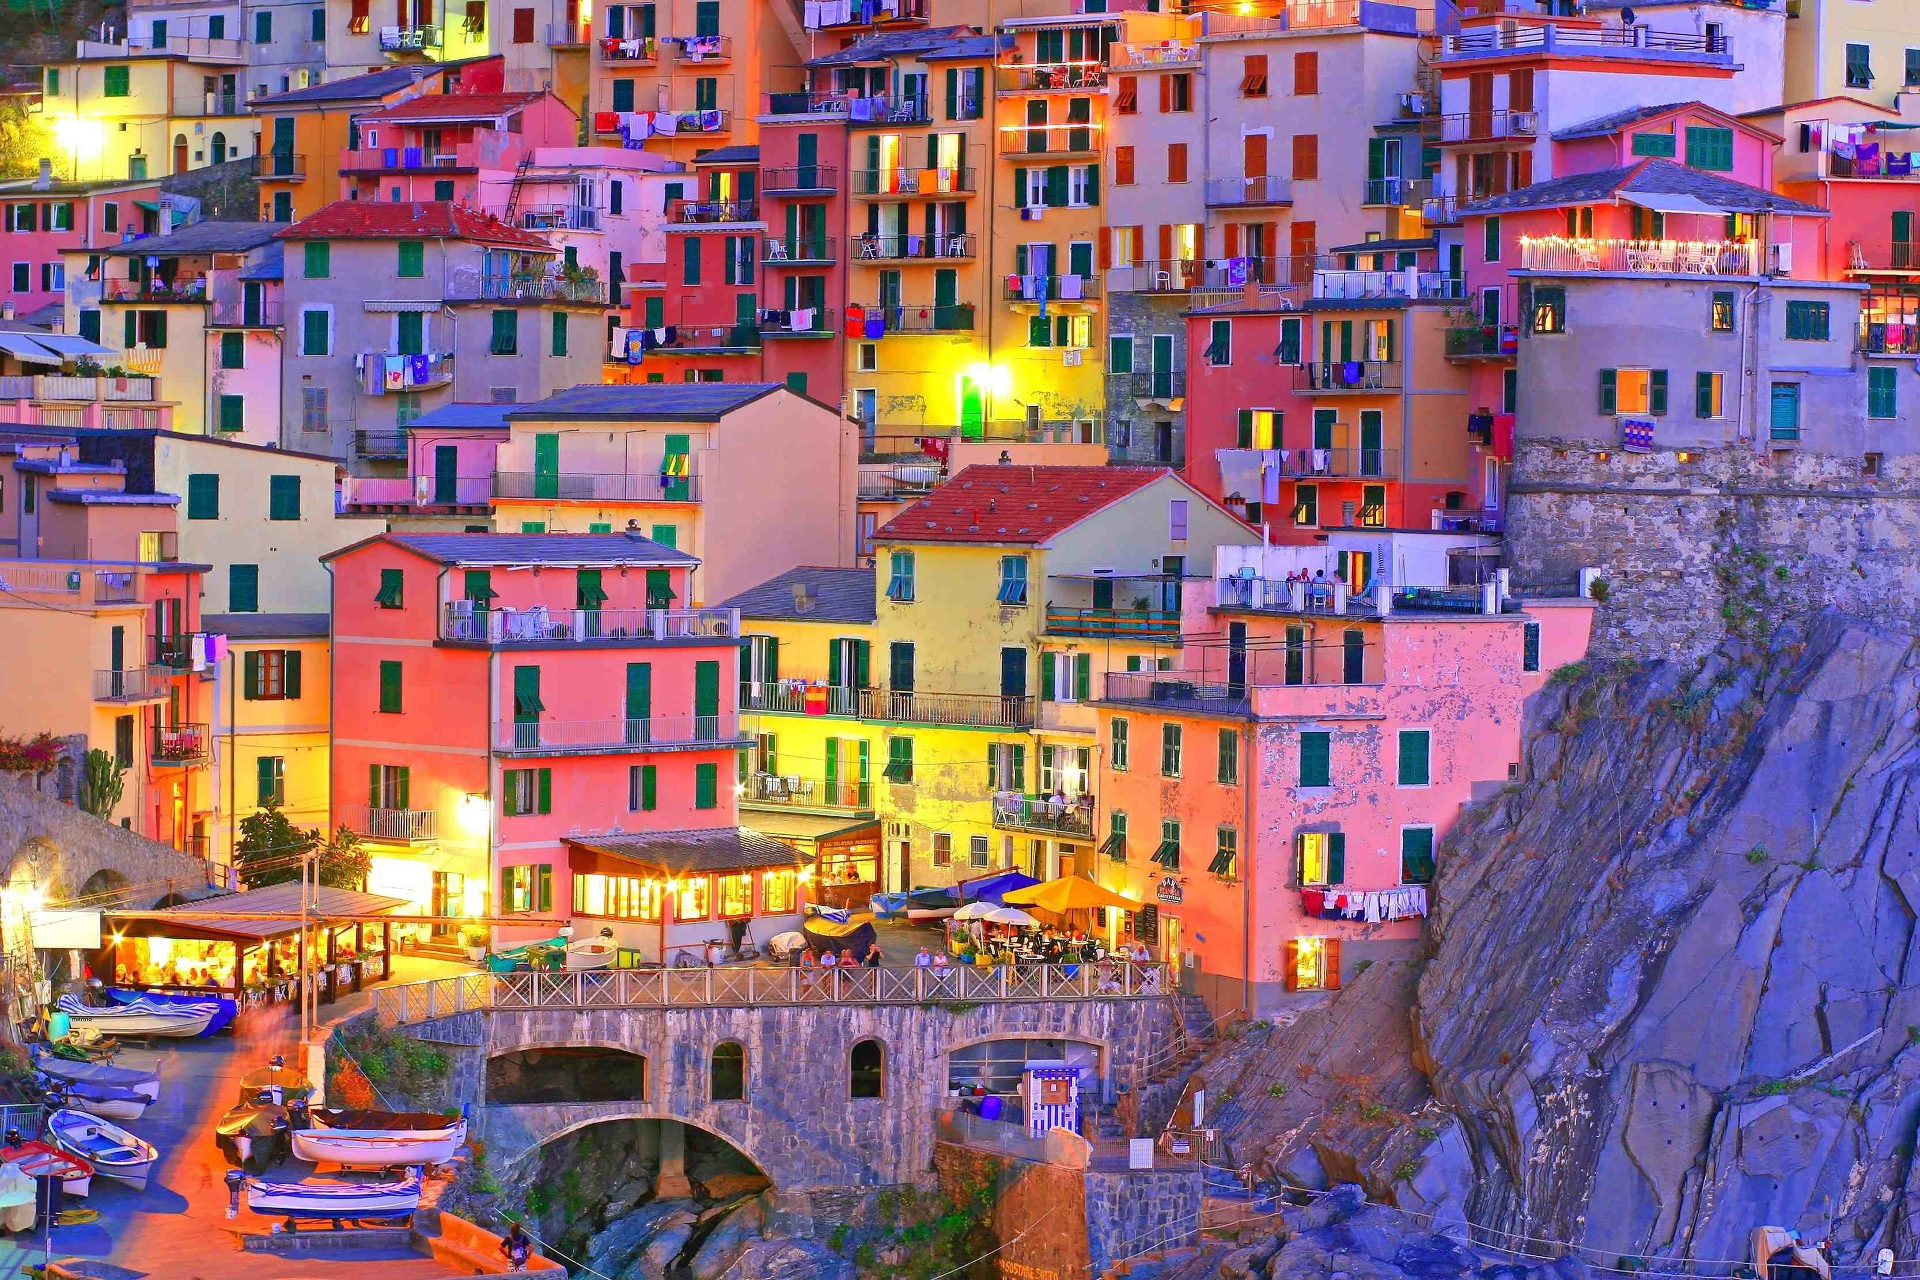 Cinque Terre, Italy at Dusk